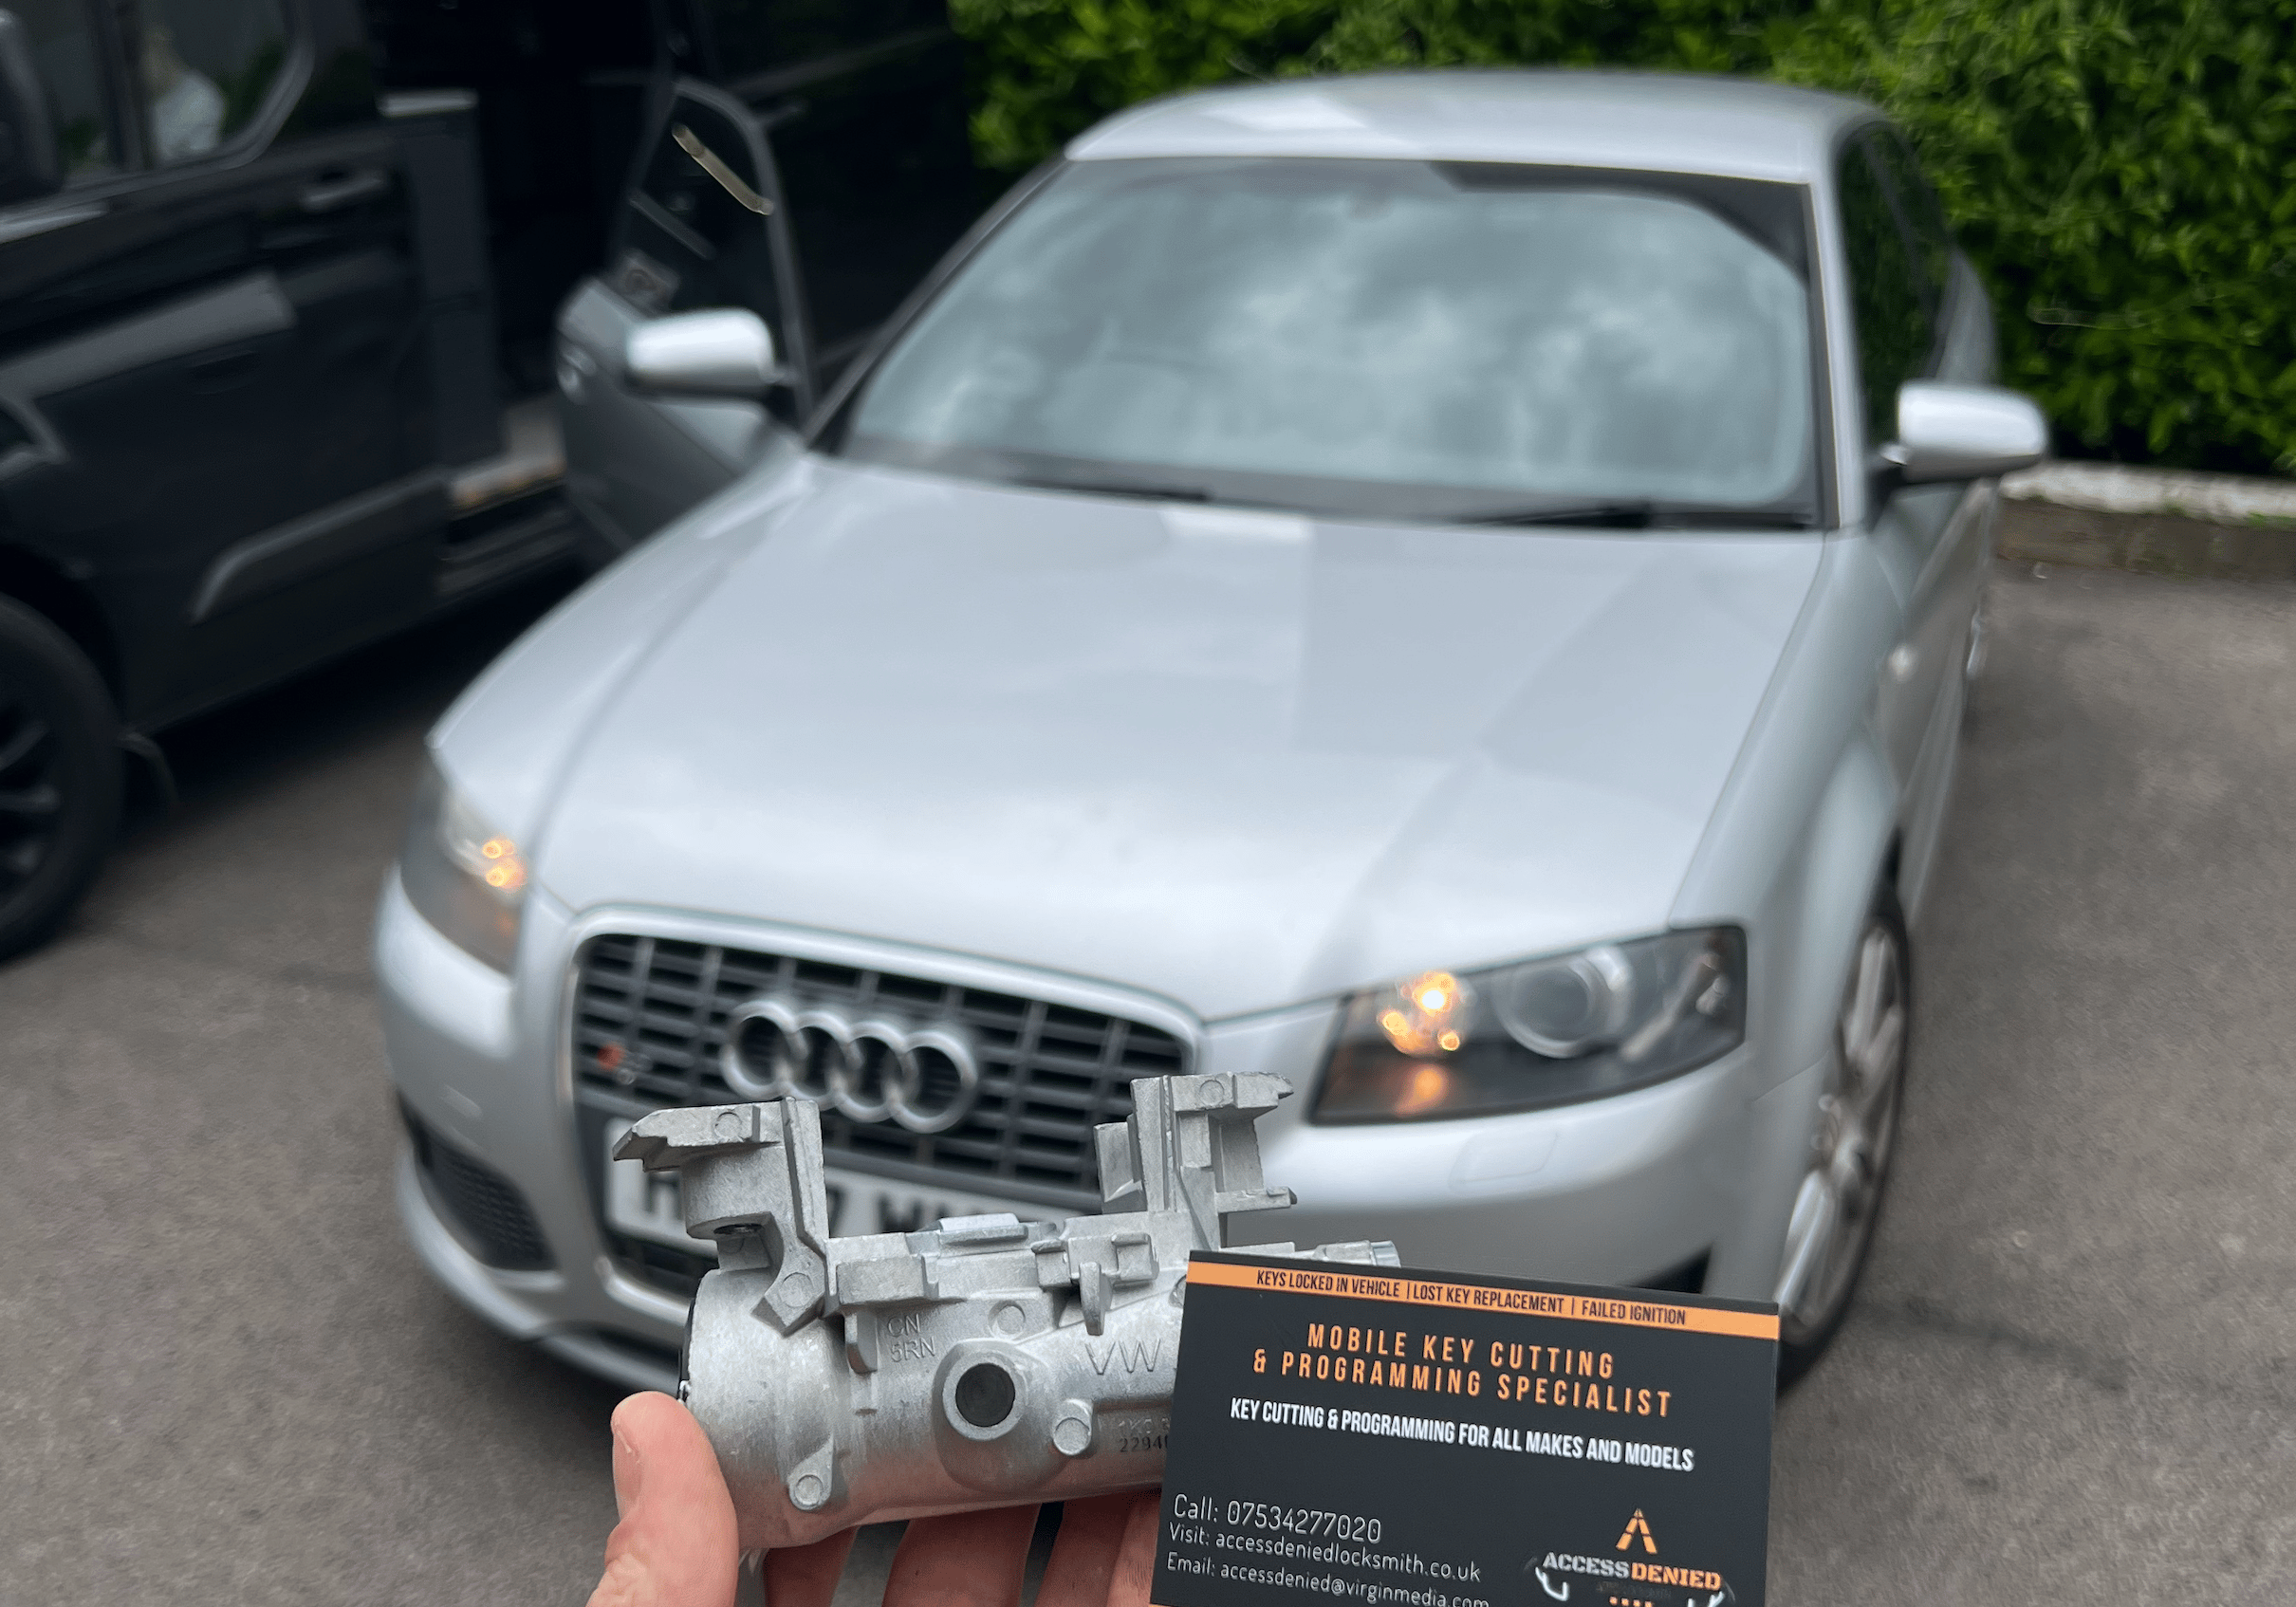 Can turn key in Audi ignition barrel